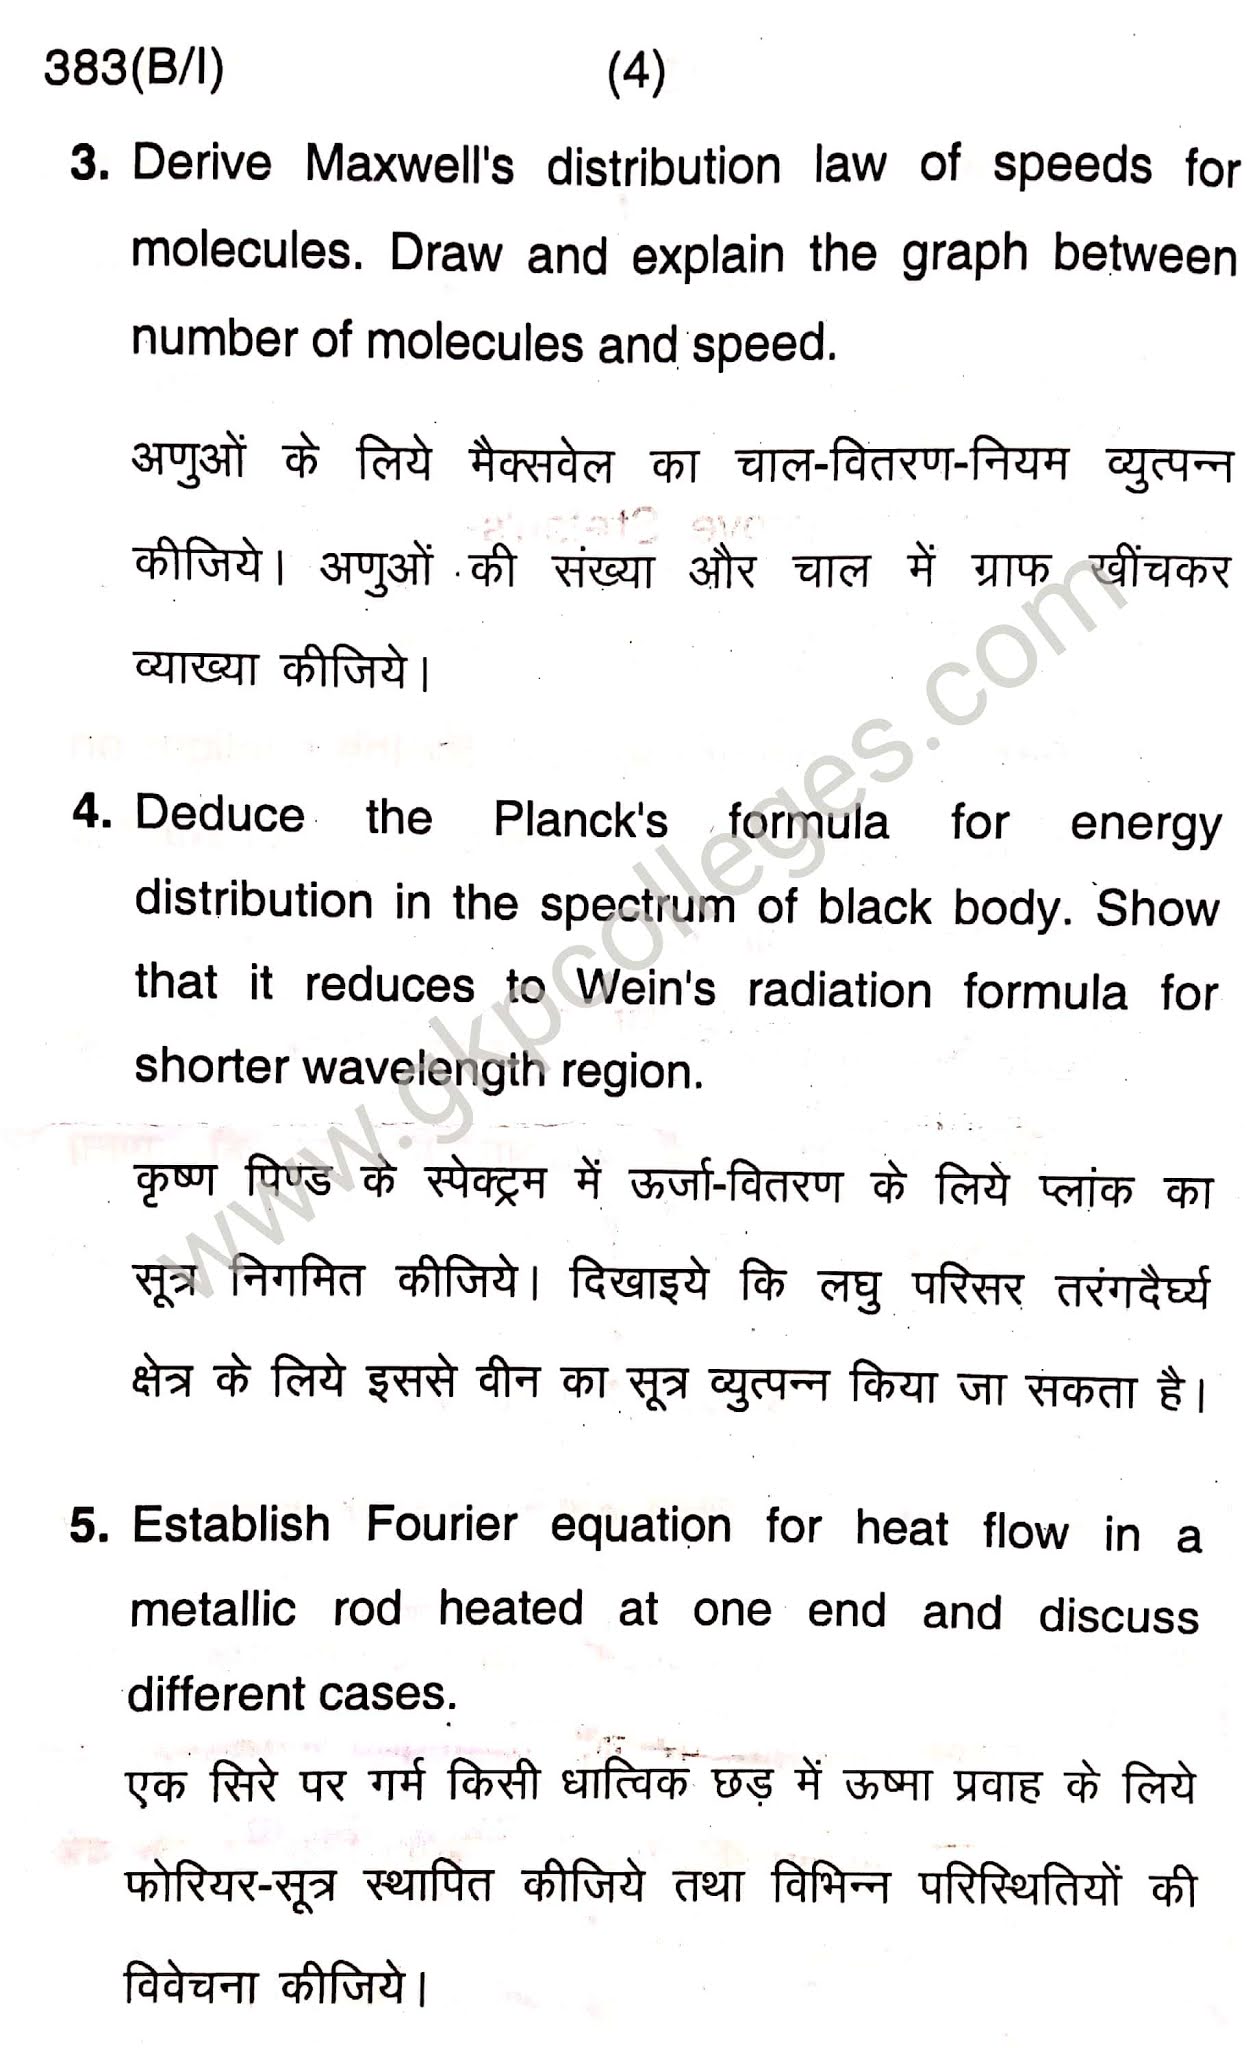 Thermal Physics back paper, Paper- 1st Back Paper for B.Sc. 2nd year students, DDU Gorakhpur University Examination 2019